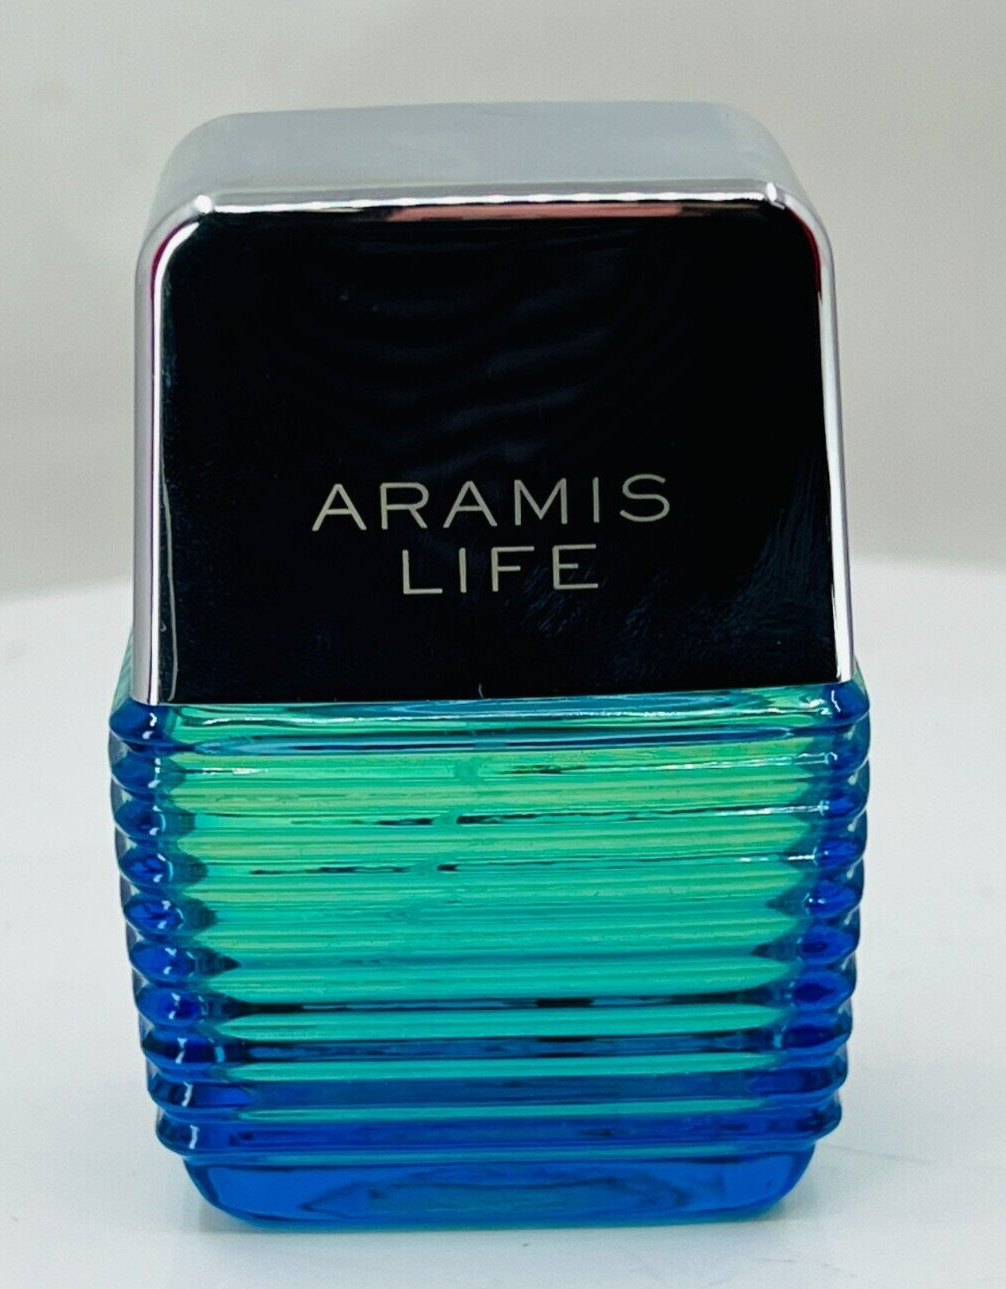 Aramis Life Eau De Toilette Spray - 1 oz /30mL - TRAVEL SIZE